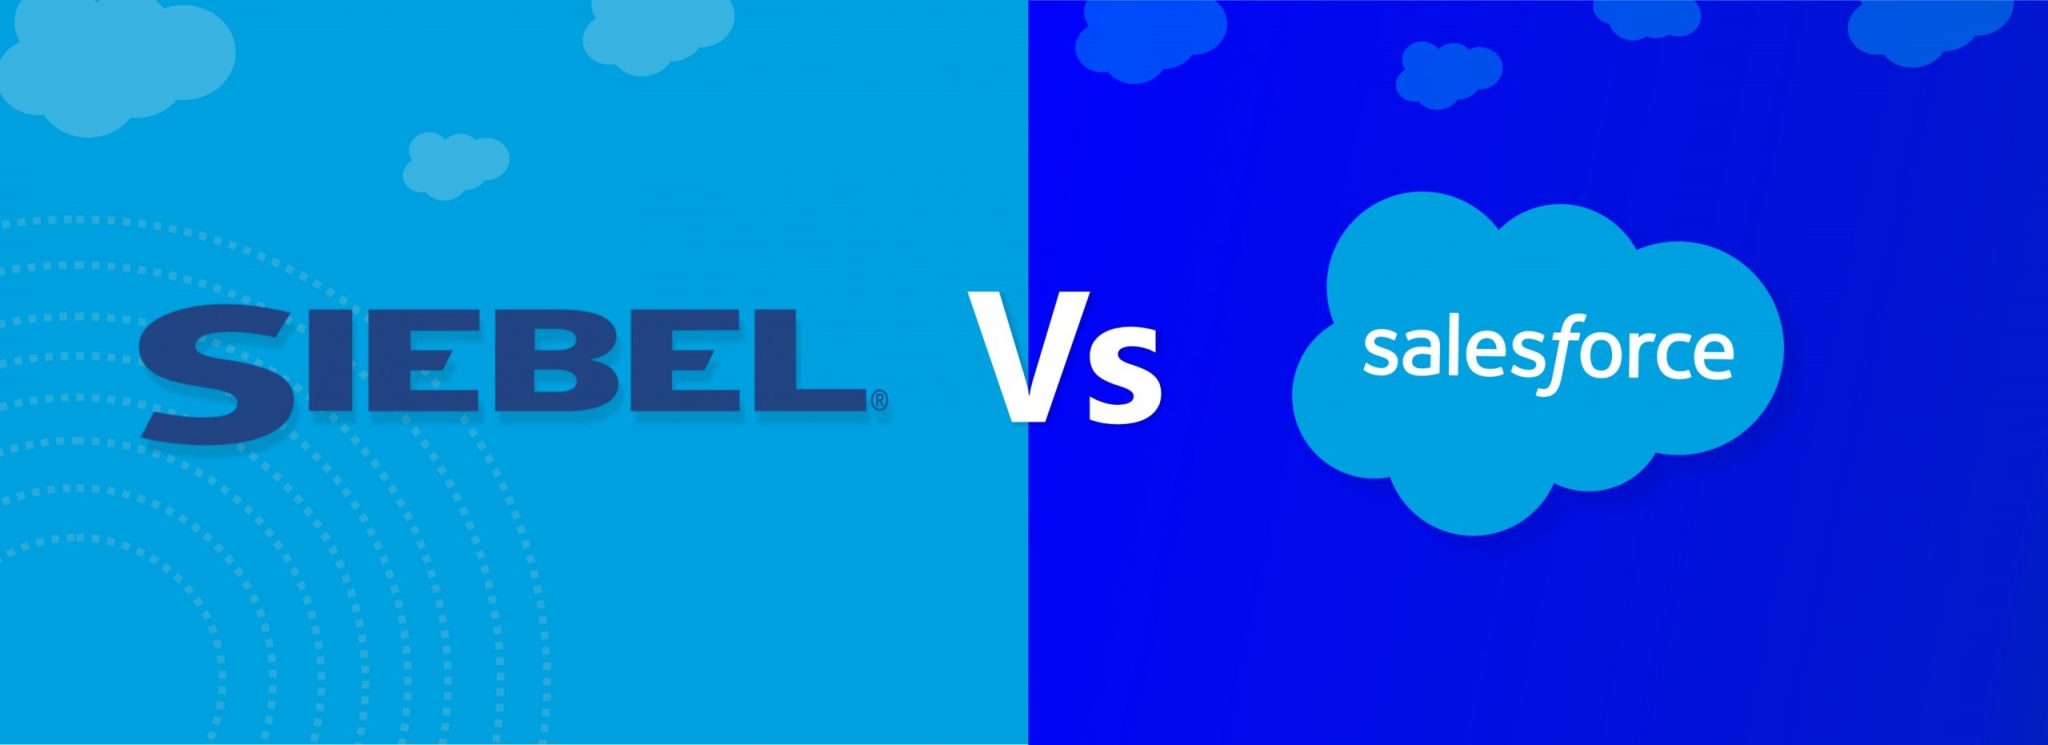 Siebel-Vs-Salesforce.jpg2_-scaled-1-2048x745